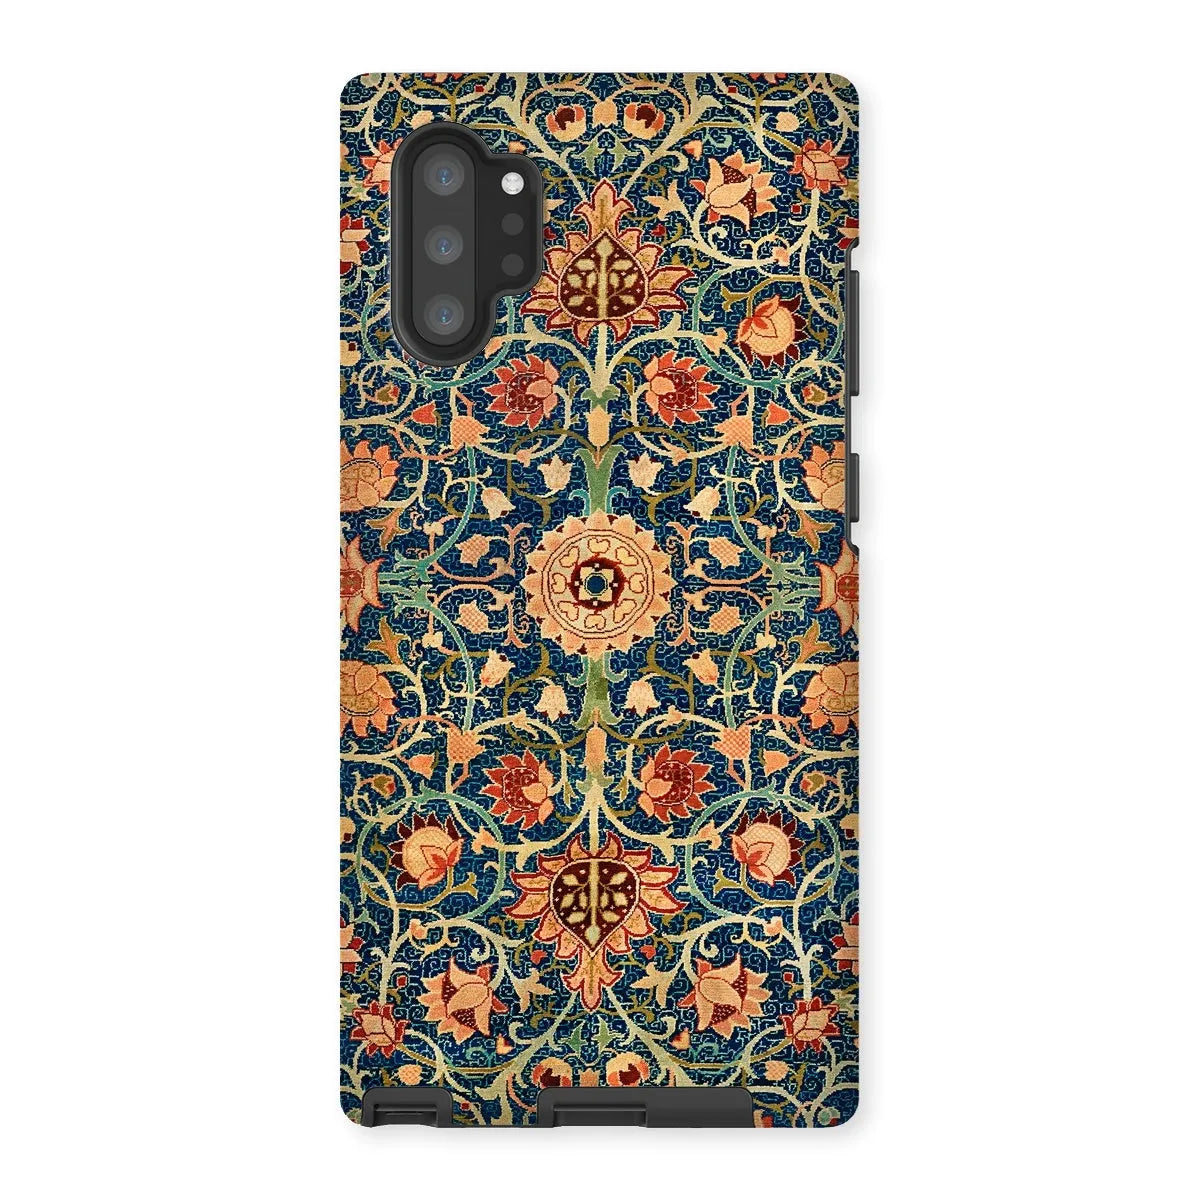 Holland Park Carpet - William Morris Pattern Art Phone Case - Samsung Galaxy Note 10p / Matte - Mobile Phone Cases